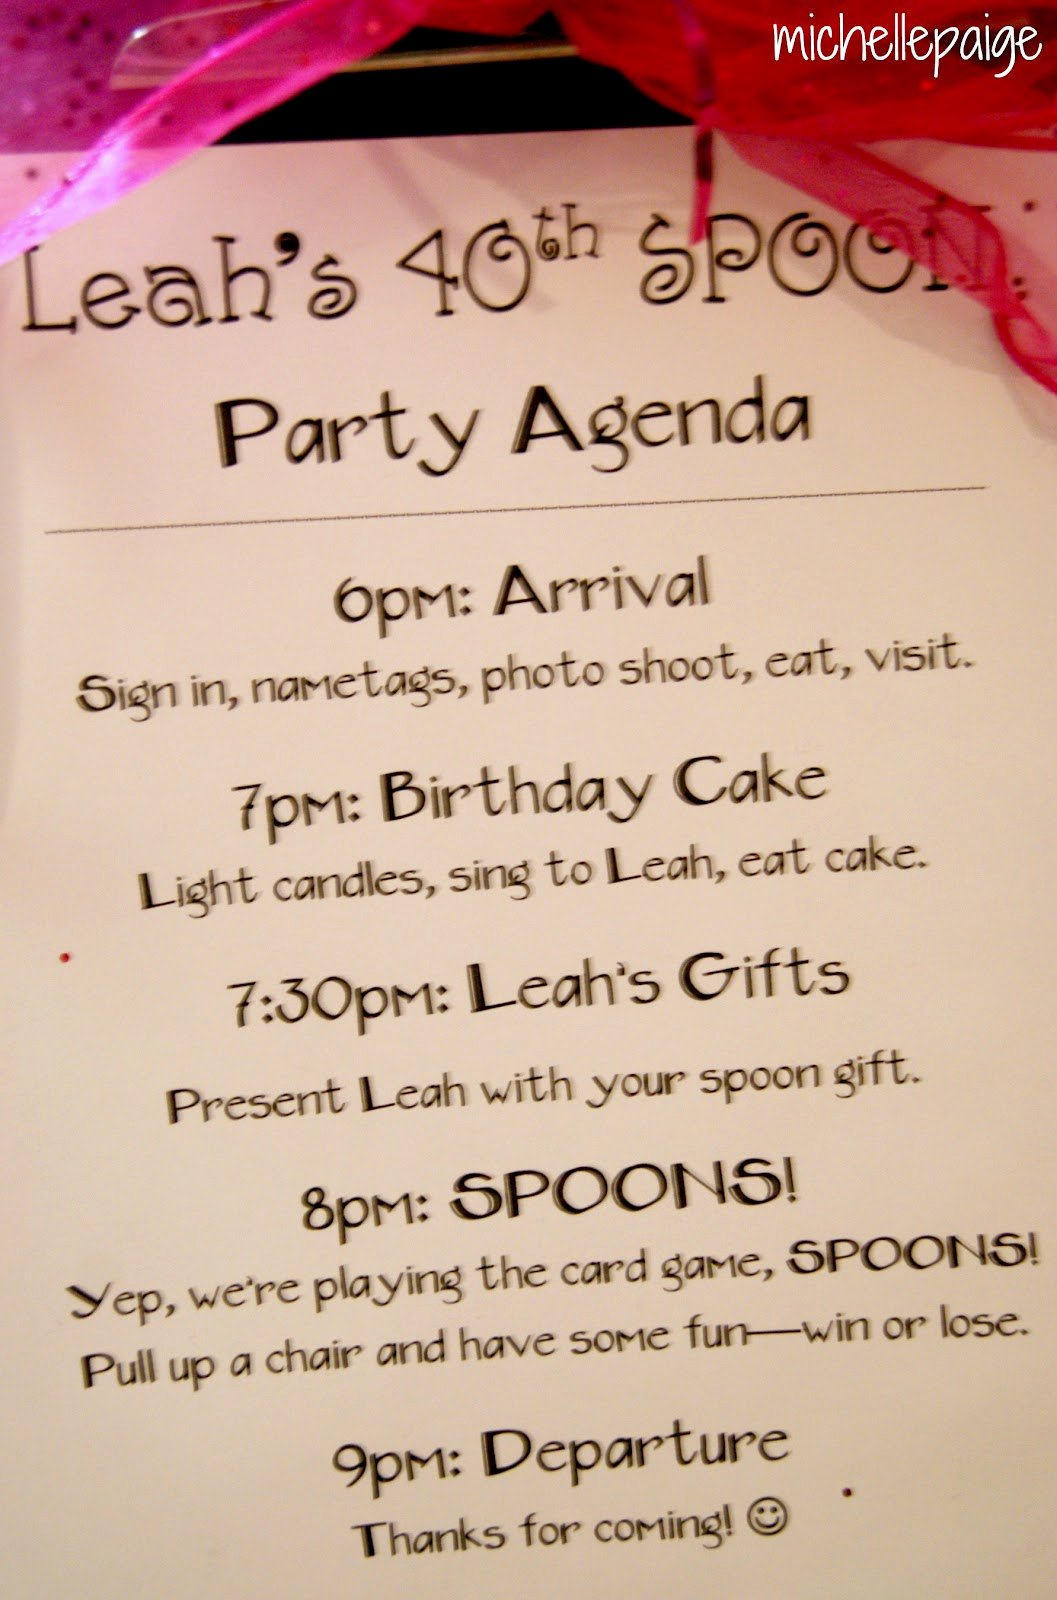 Party Agenda Template Fresh Michelle Paige Blogs A Spoon Party